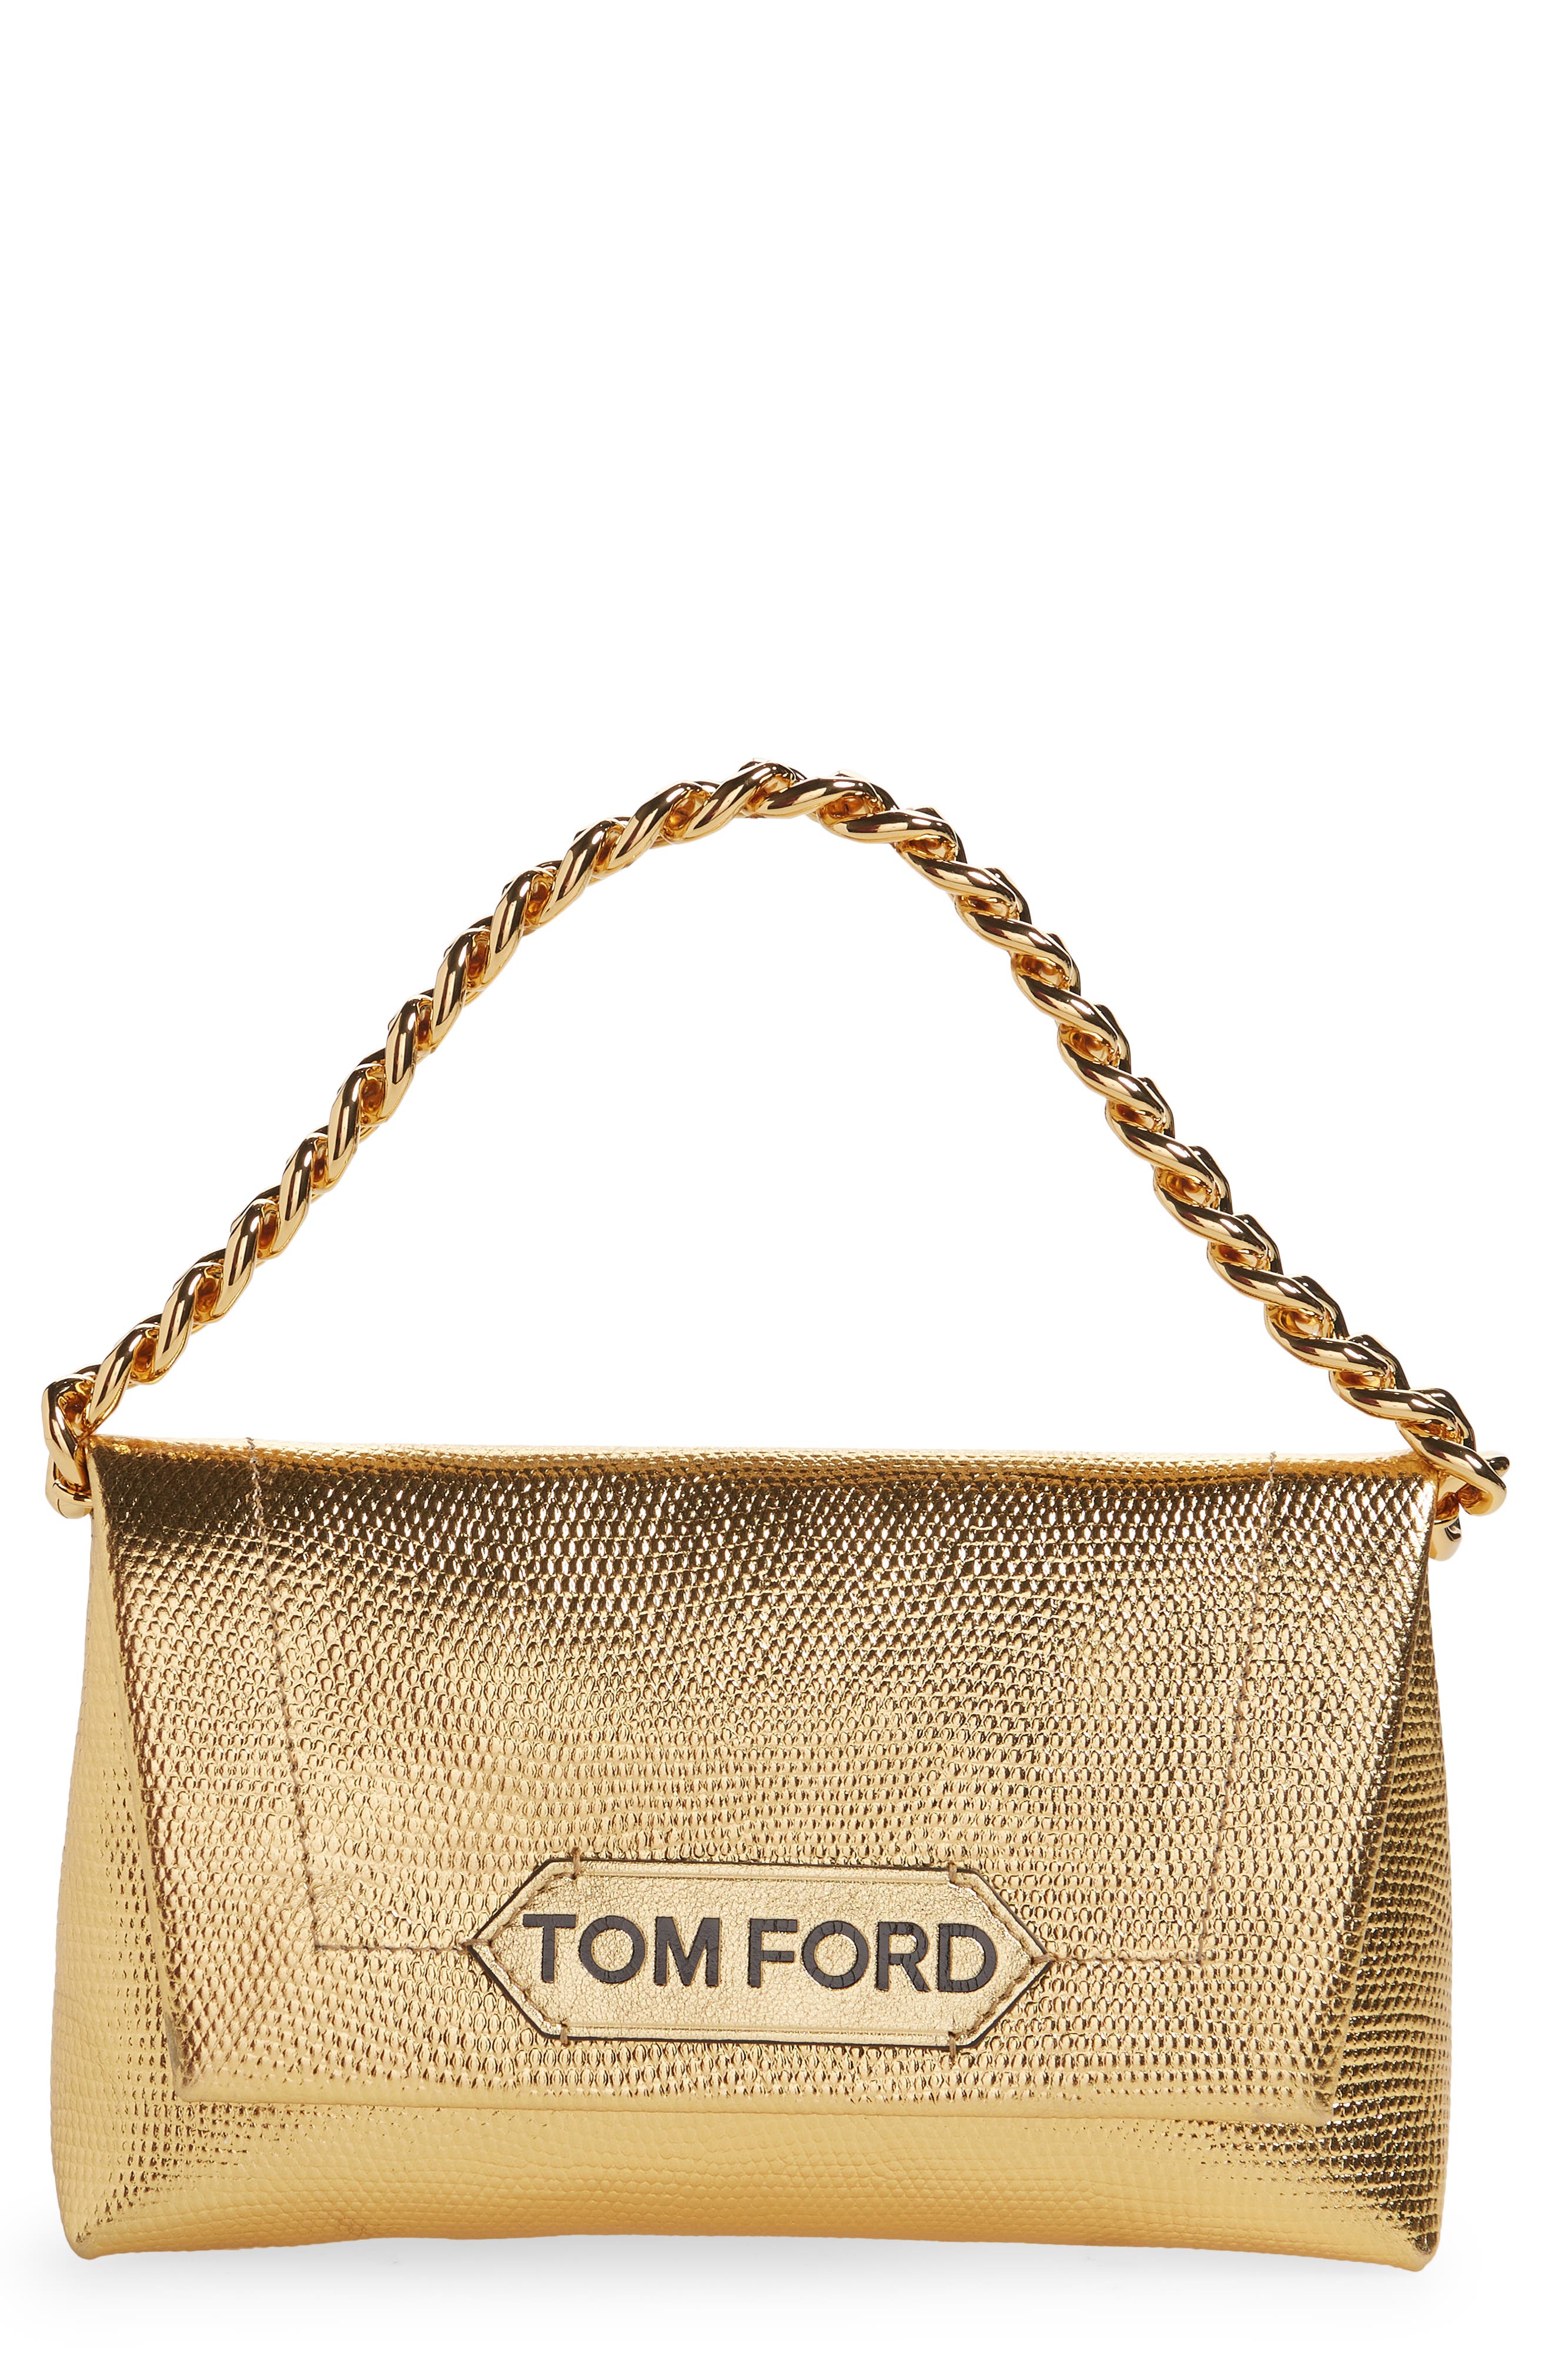 TOM FORD gold Python TF Clutch Bag